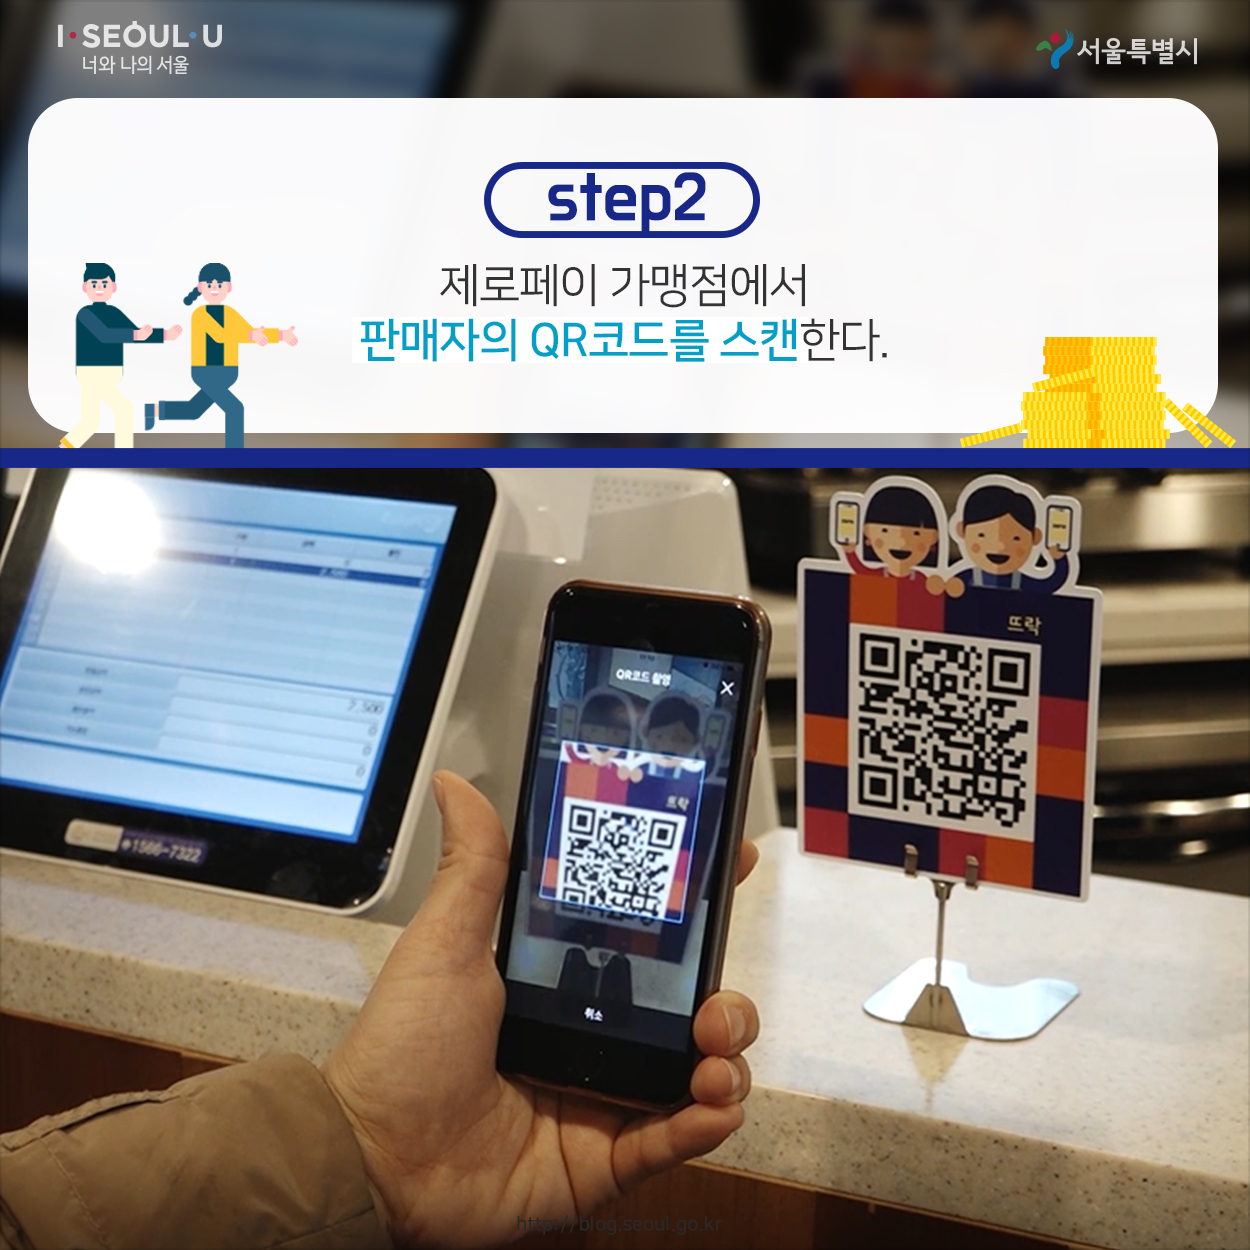 step2 제로페이 가맹접에서 판매자의 QR 코드를 스캔한다.